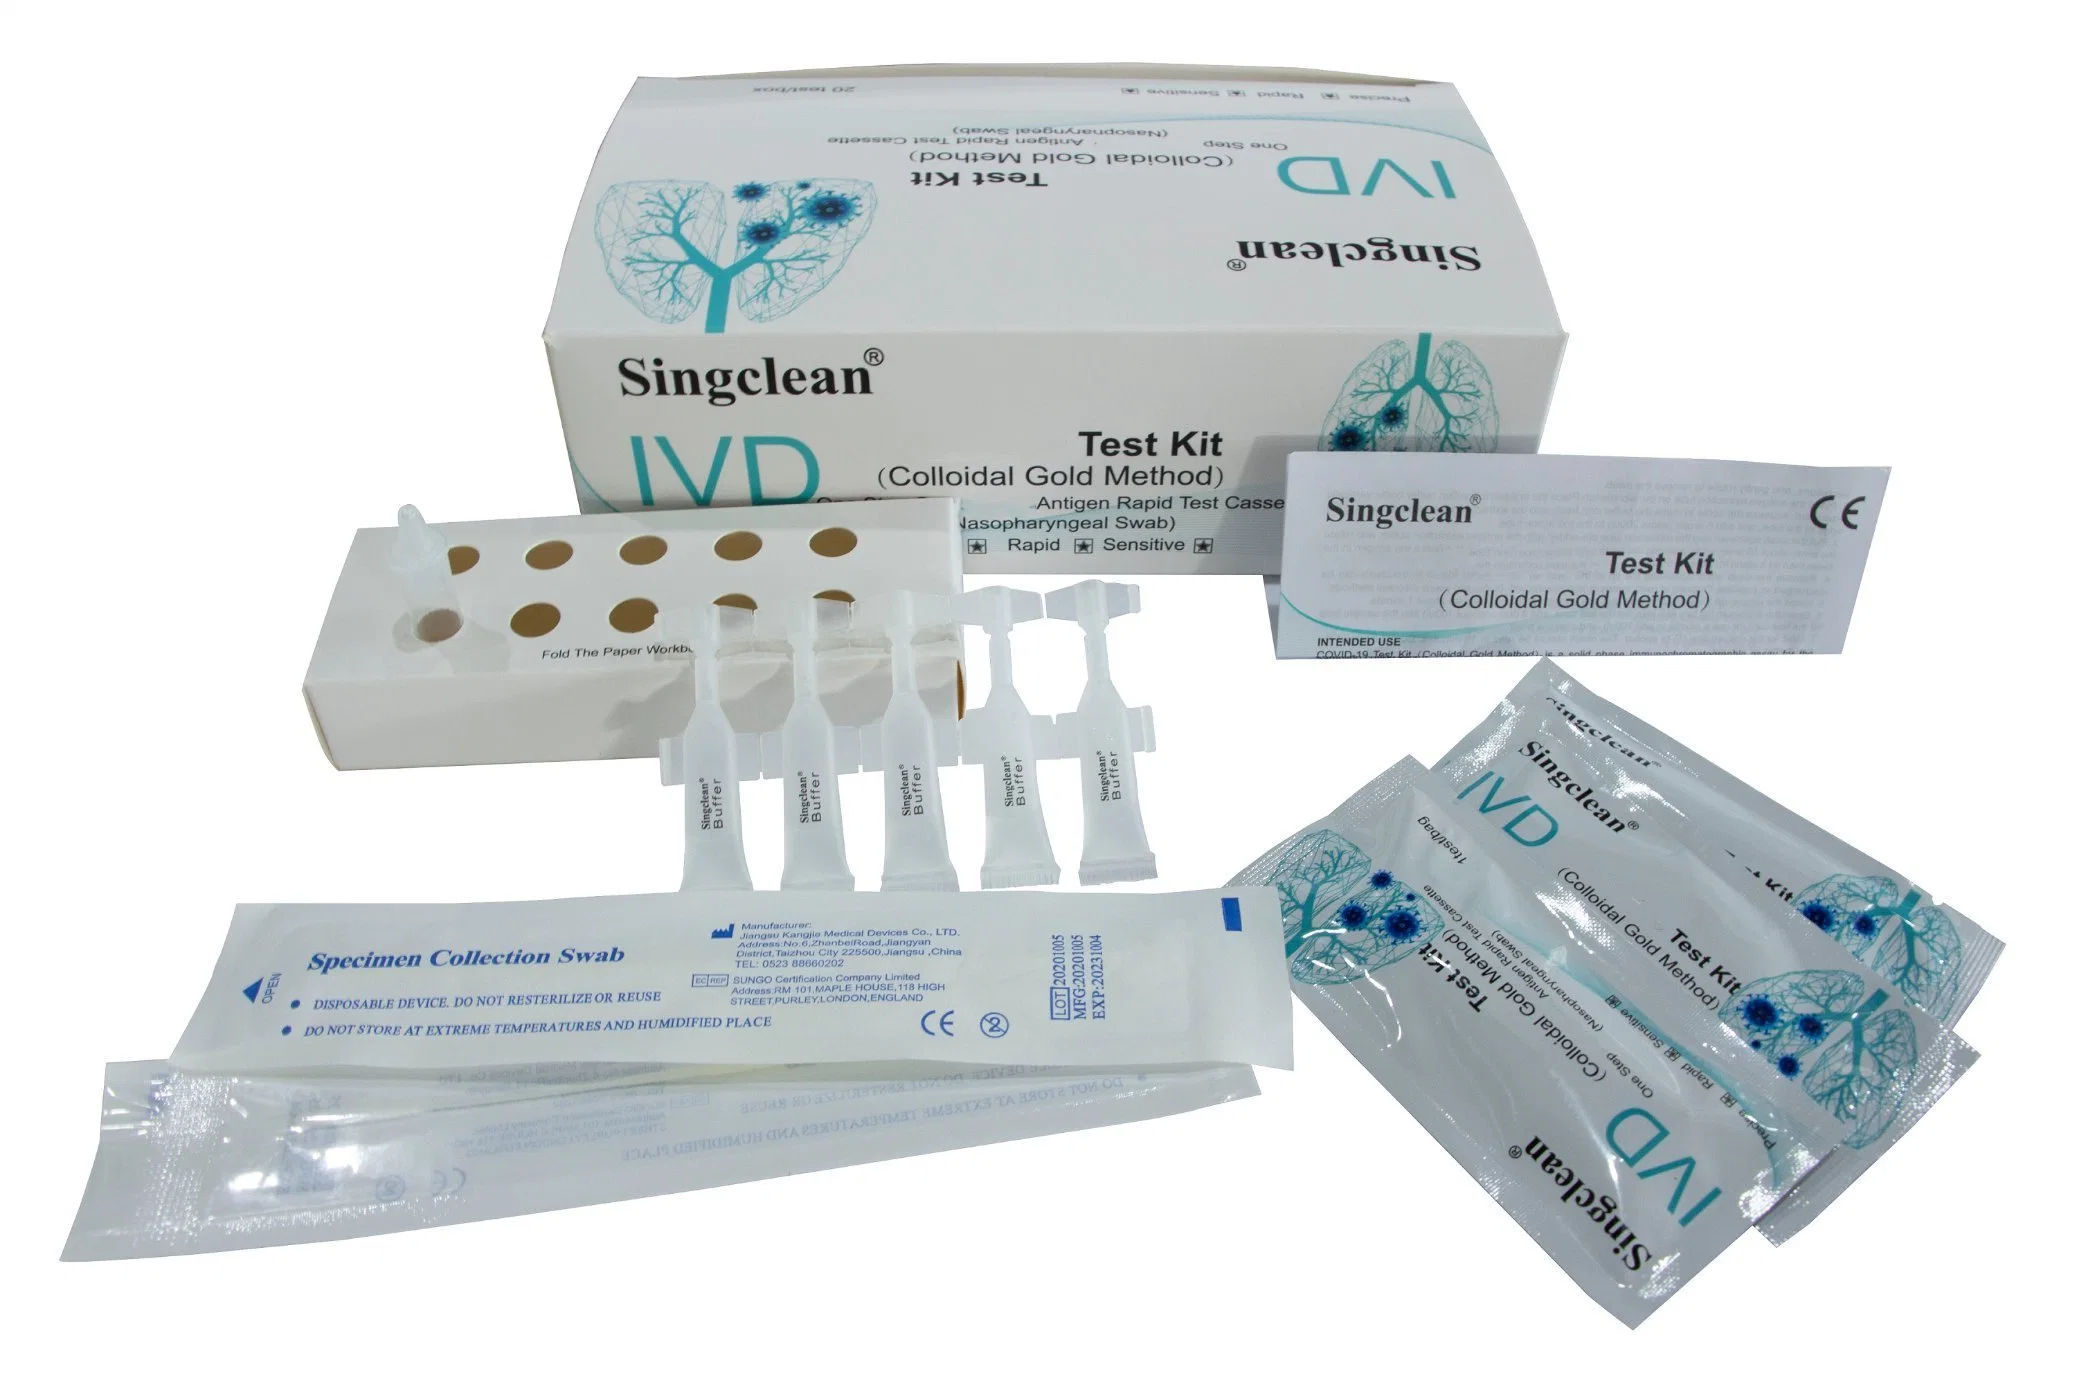 Singclean Igg Igm Antibody Rapid Diagnostic Test Kit with CE Mark